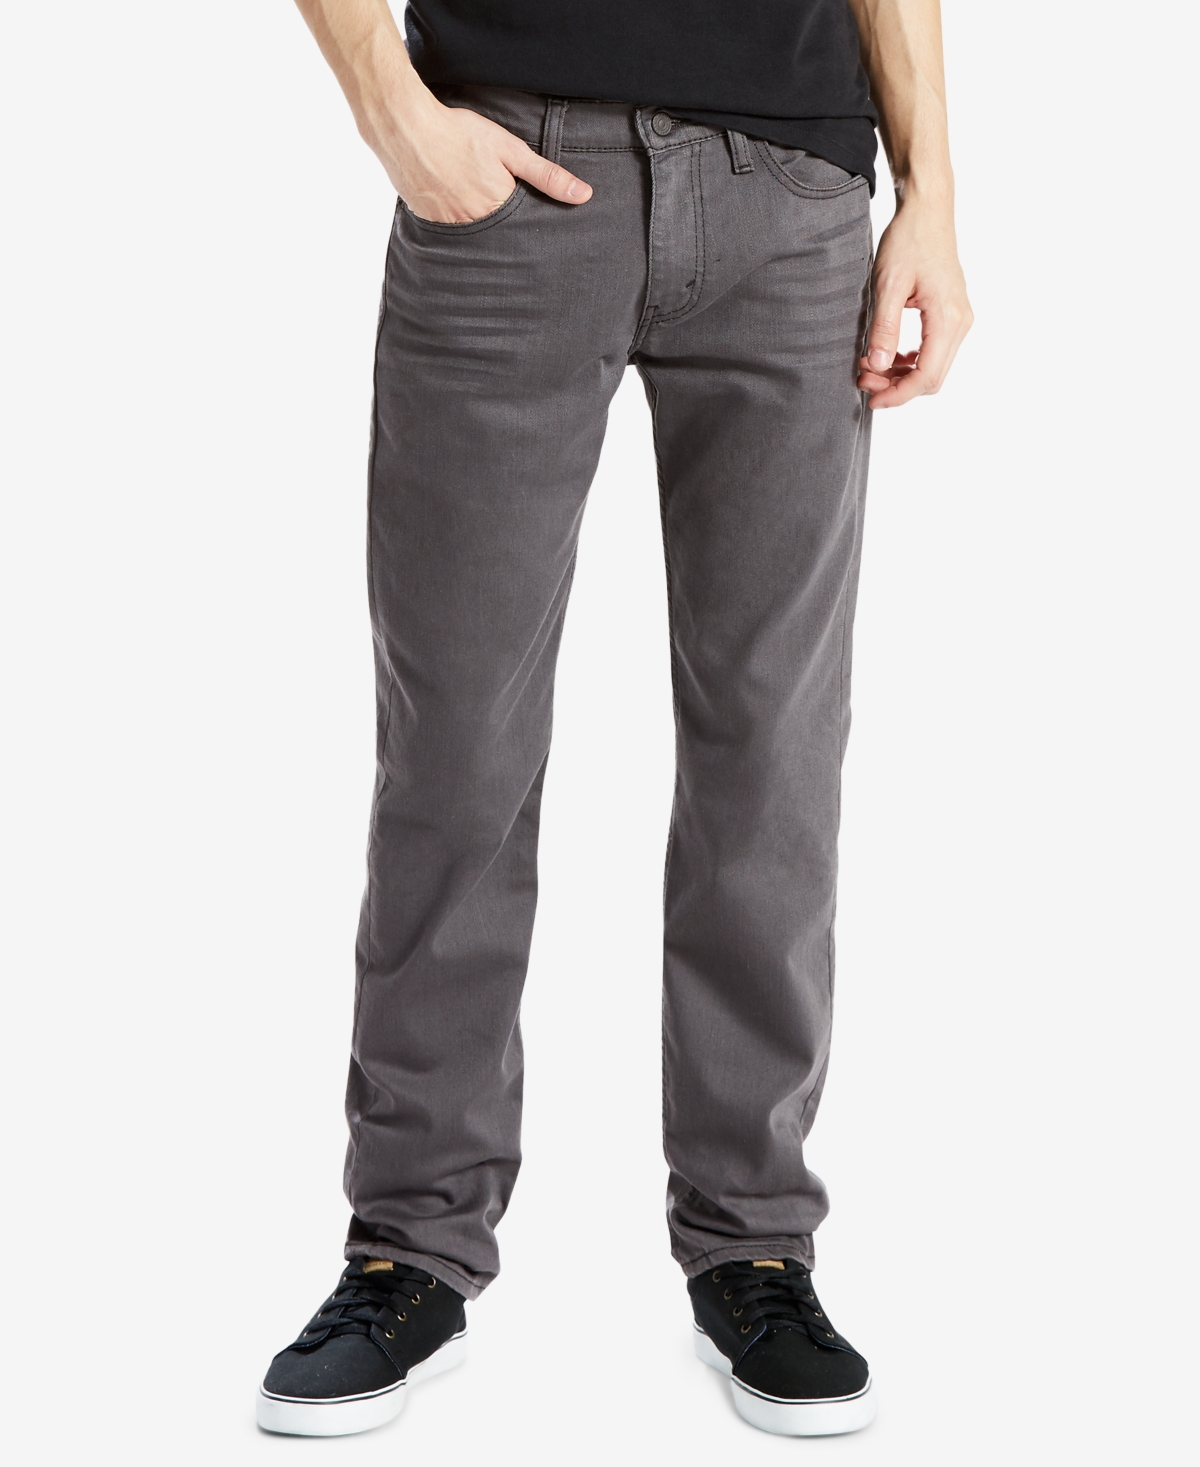 UPC 190416414338 product image for Levi's Men's 511 Slim Fit Jeans | upcitemdb.com